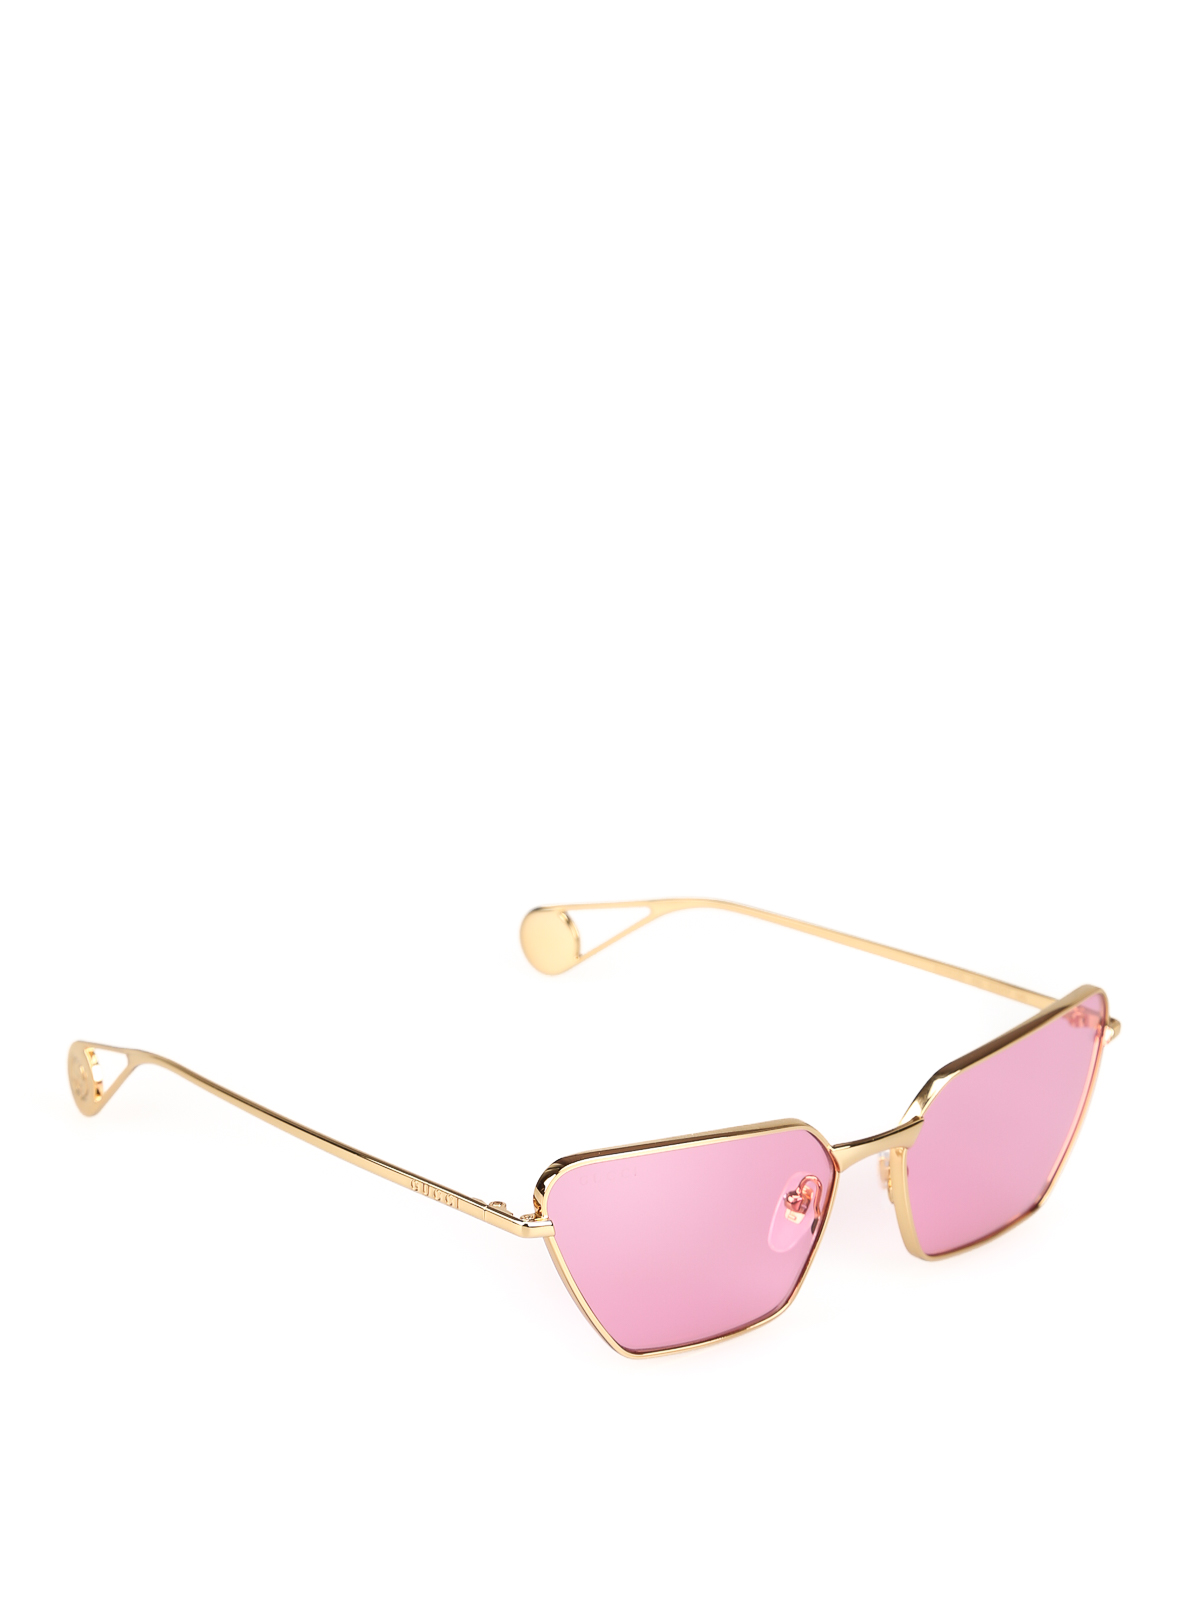 gucci rose gold sunglasses